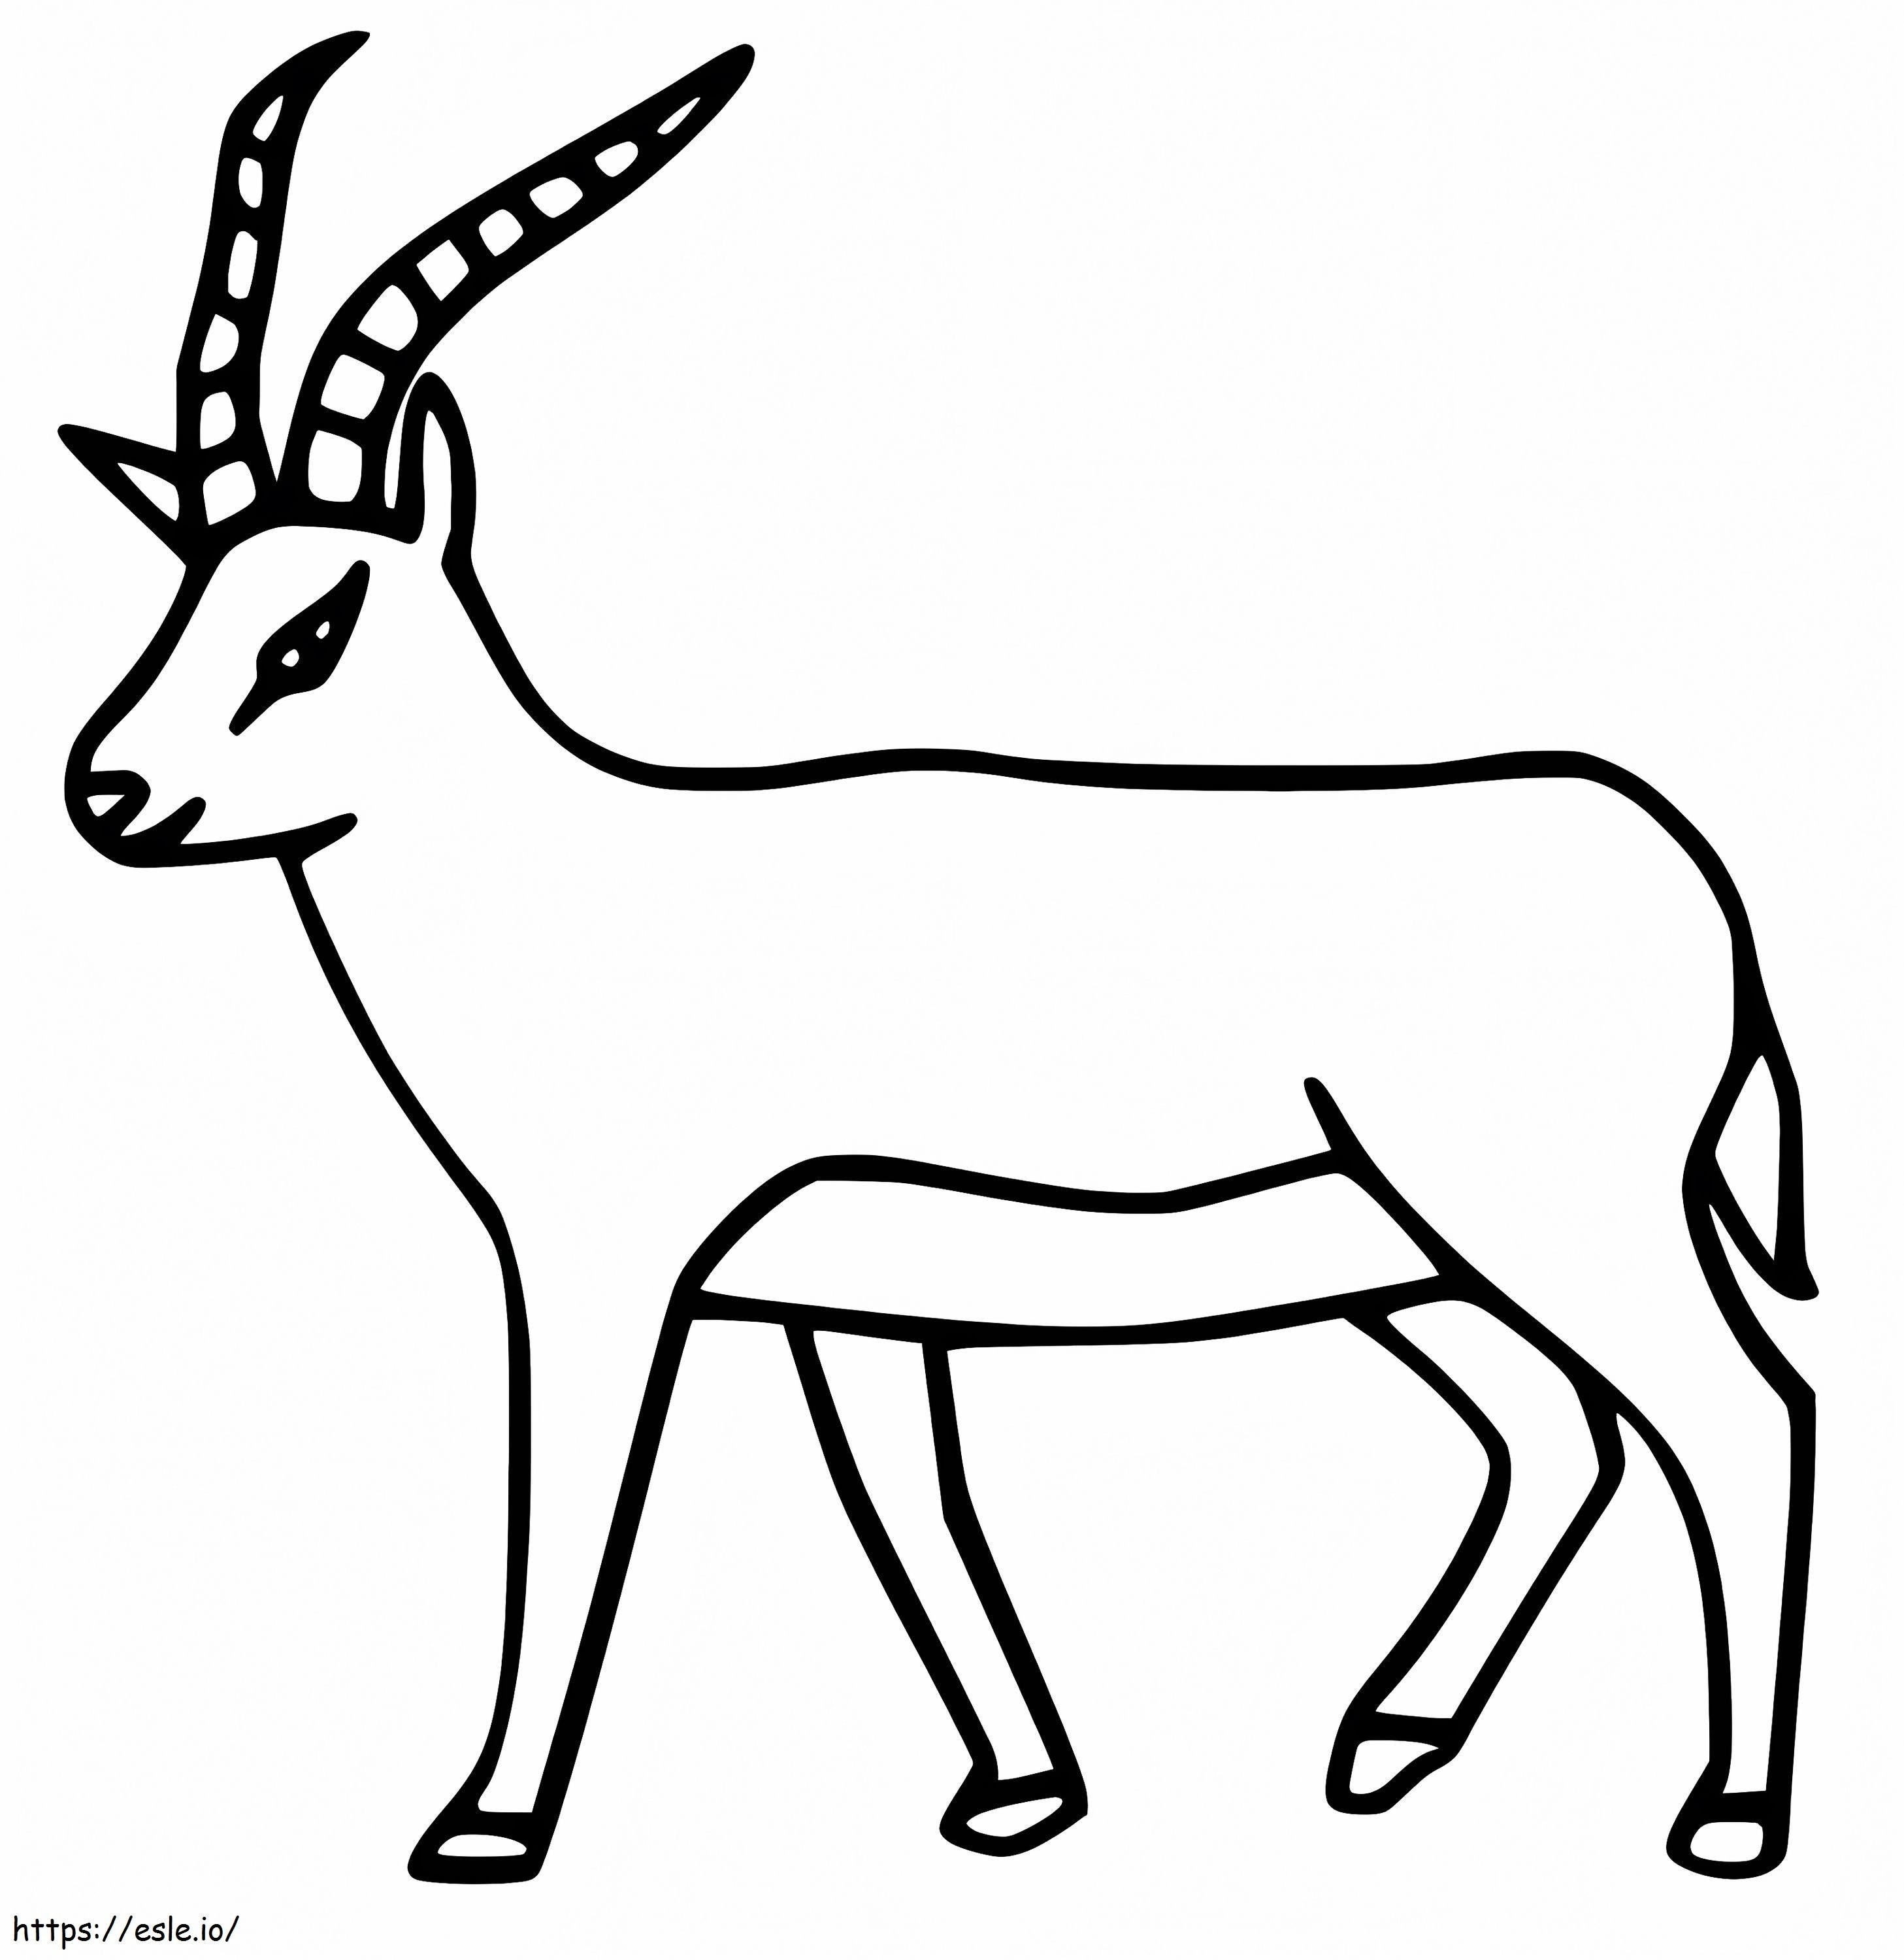 Antilope 2 da colorare